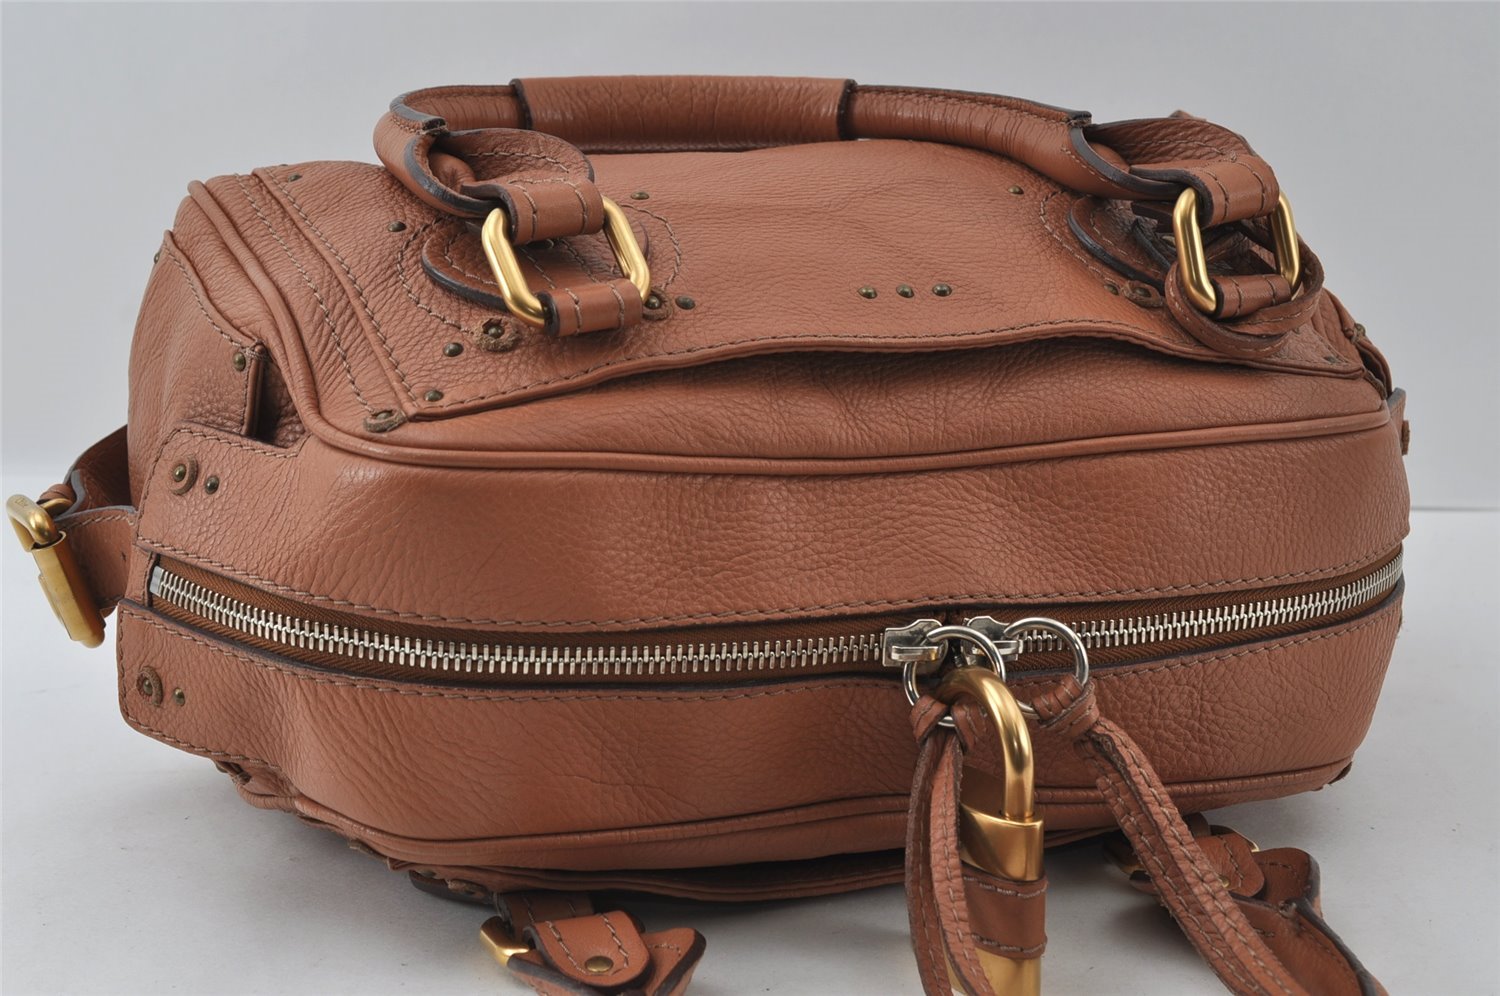 Authentic Chloe Paddington Vintage Leather Shoulder Hand Bag Purse Brown 4679I